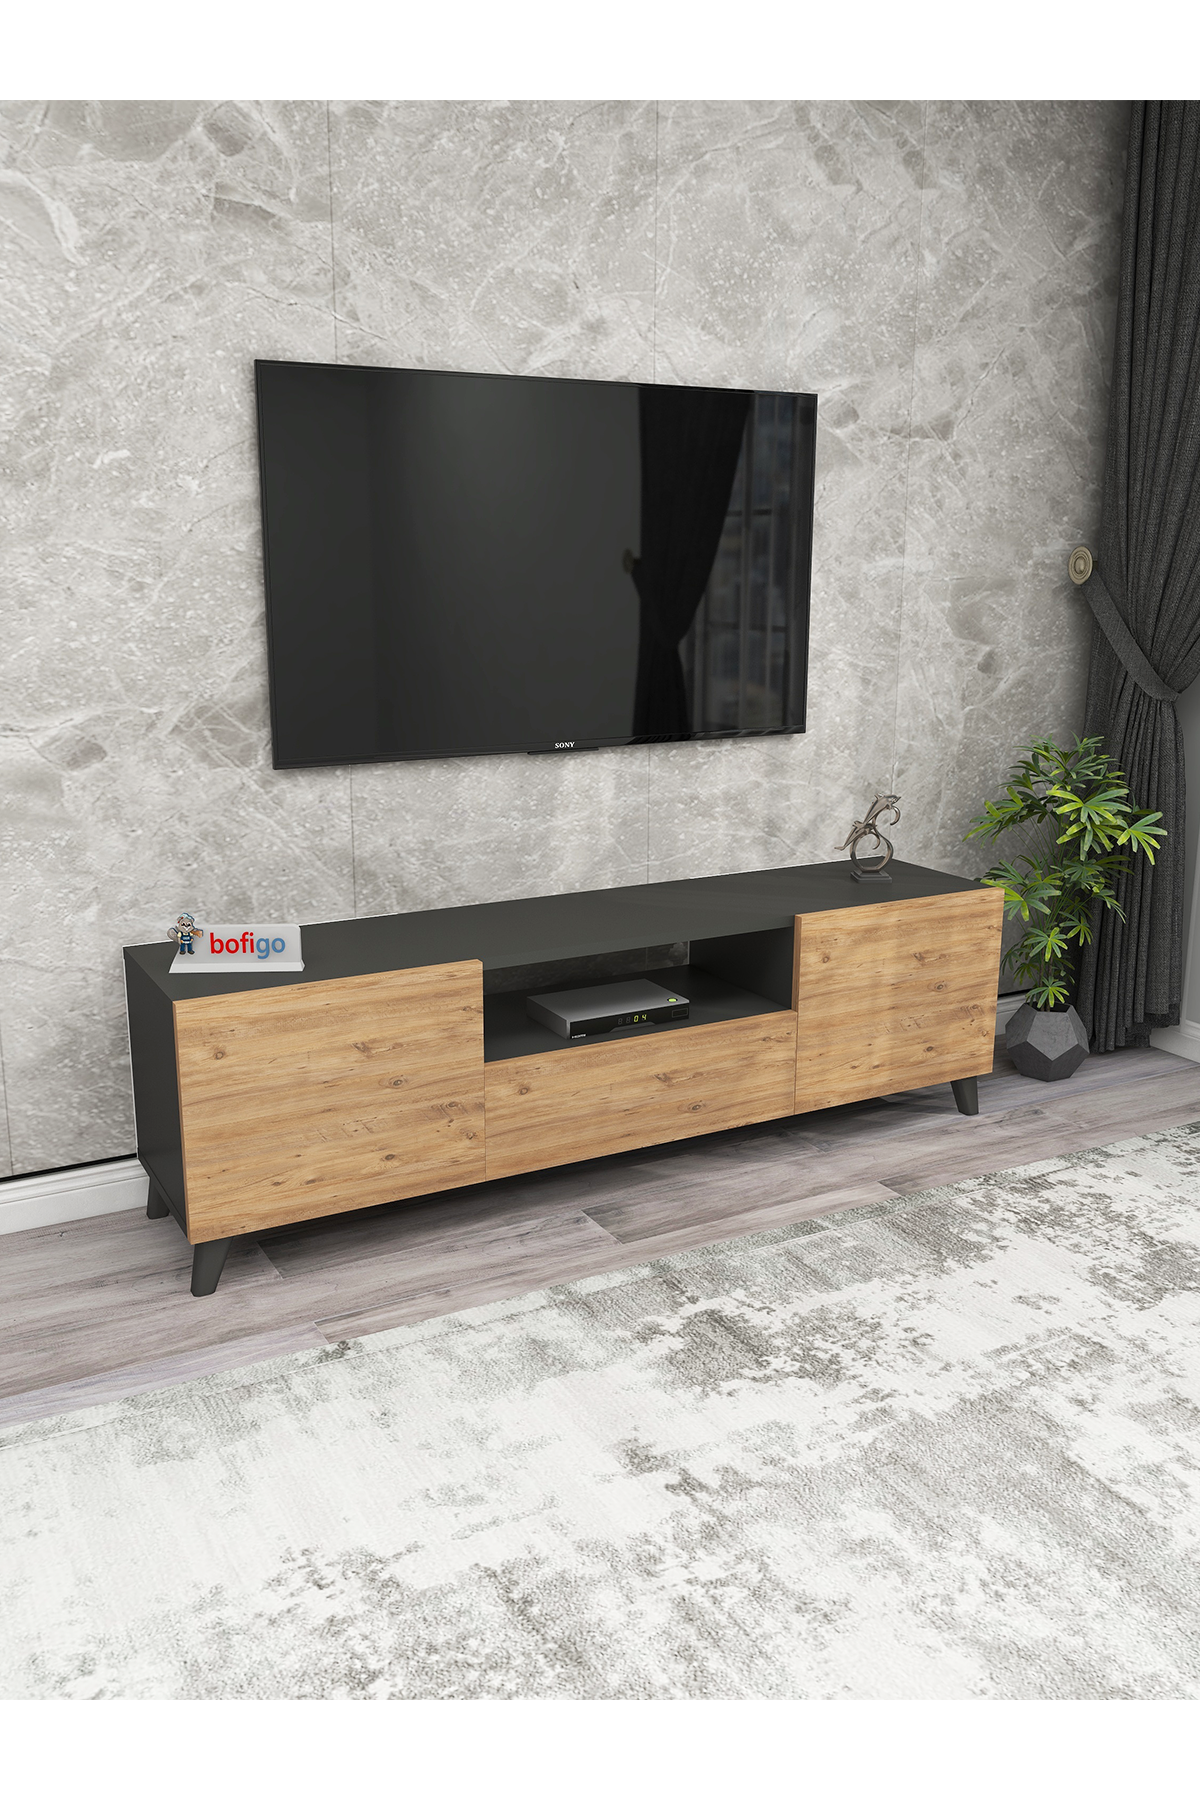 Bofigo TV Stand Shelf TV Unit Television Table Antracite-Pine